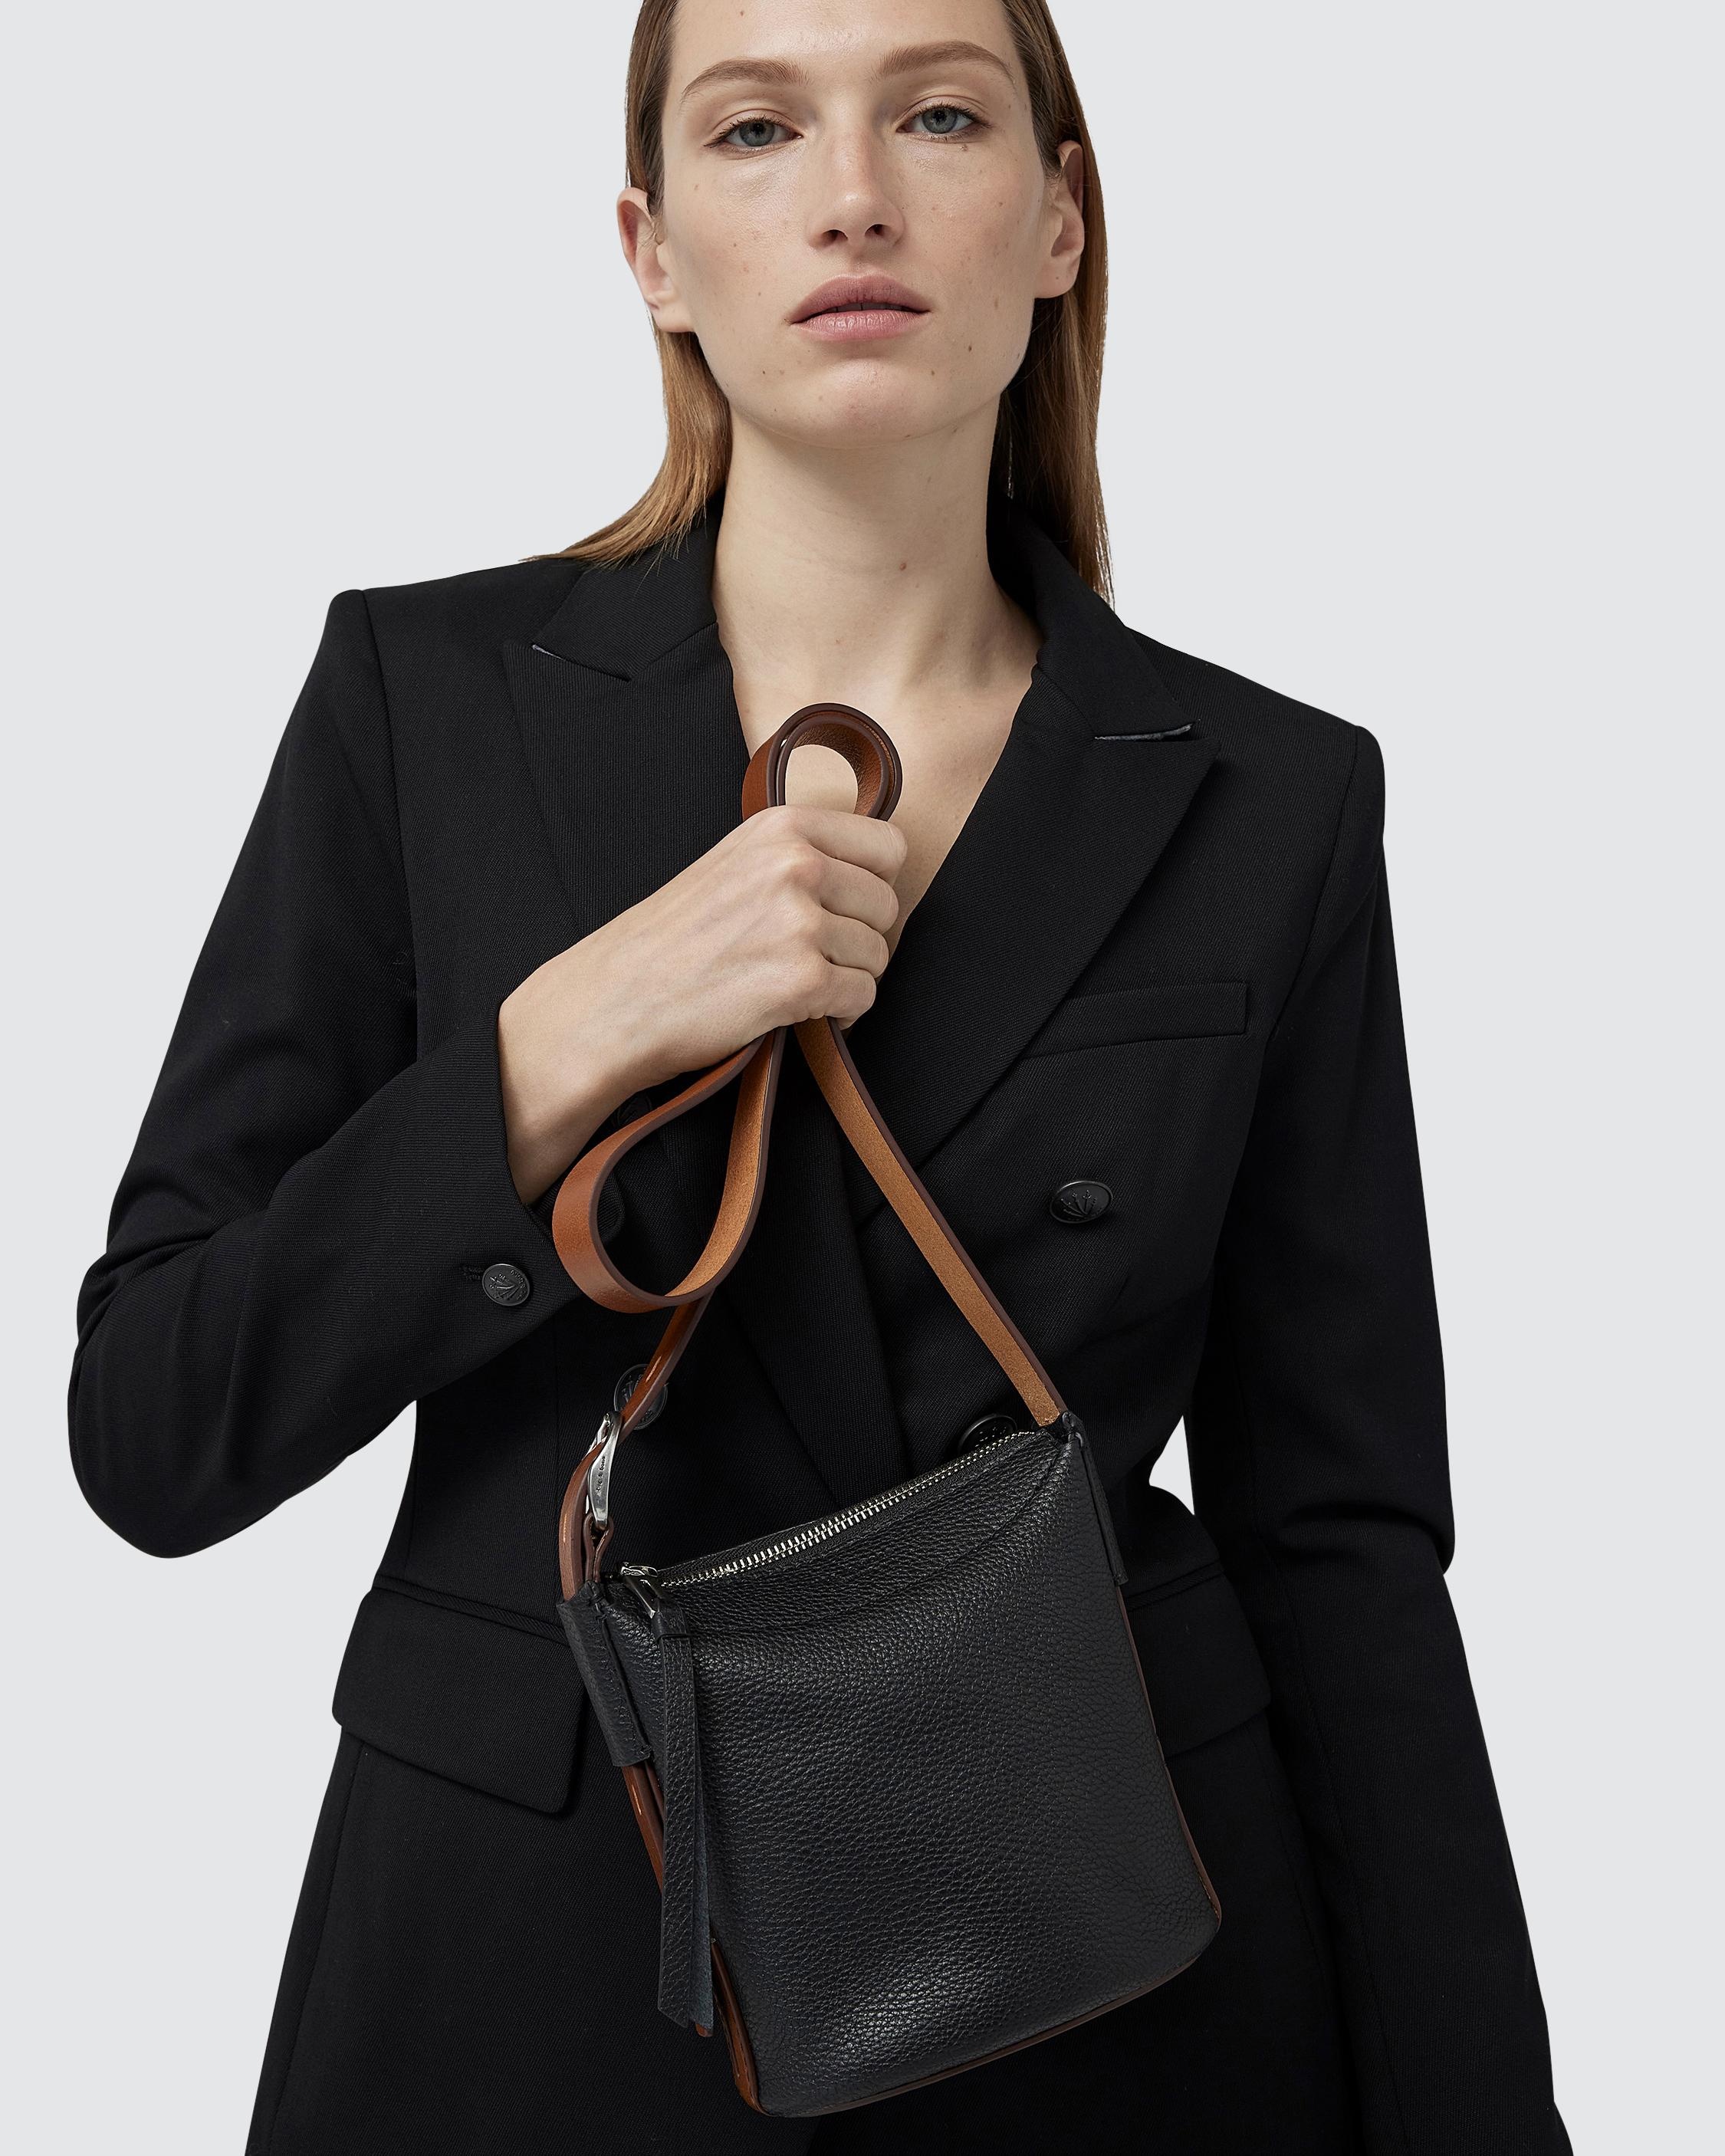 Buy the Belize Bucket Bag - Leather